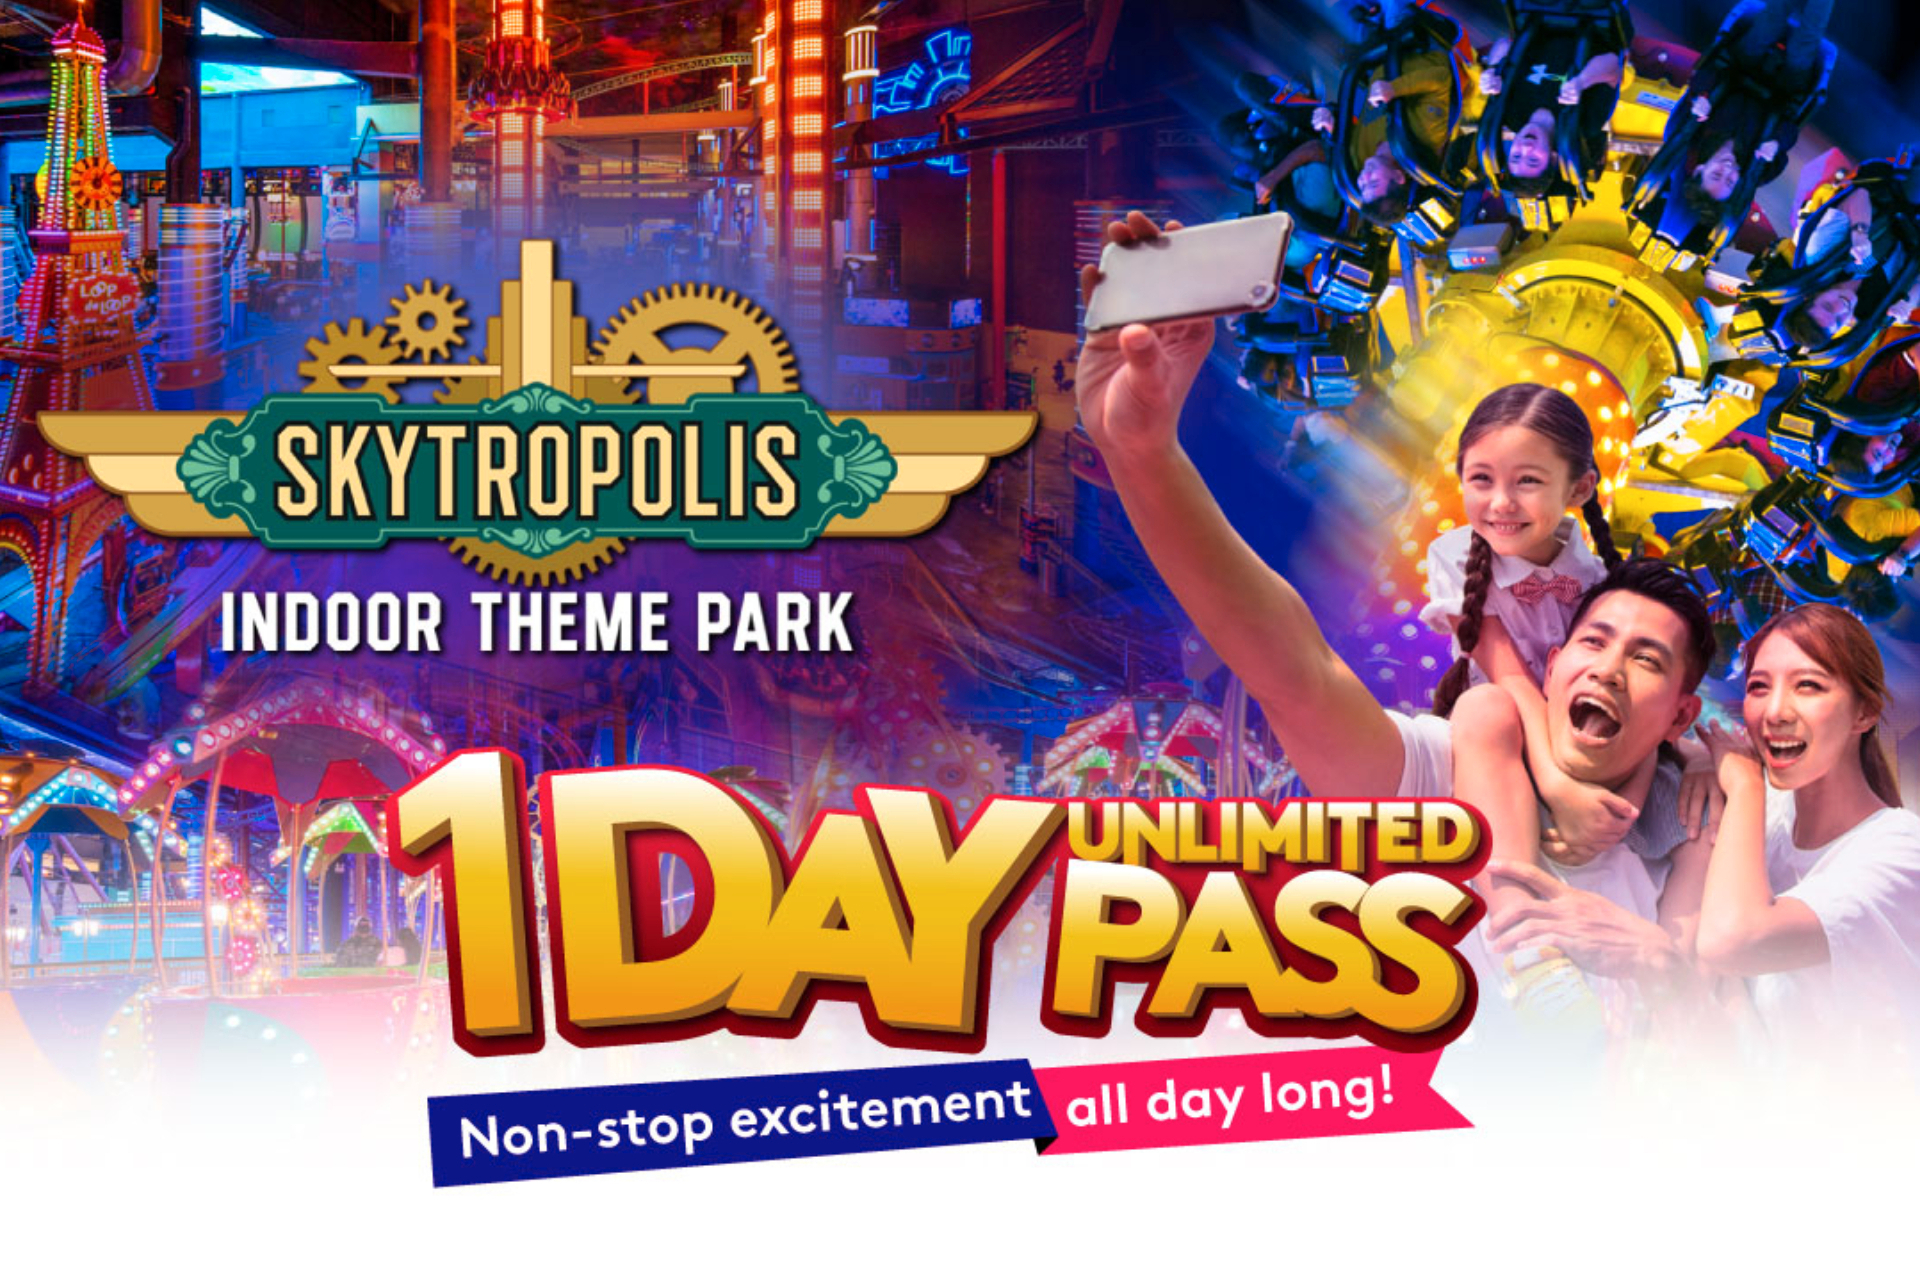 Genting Skytropolis Indoor Theme Park.jpg